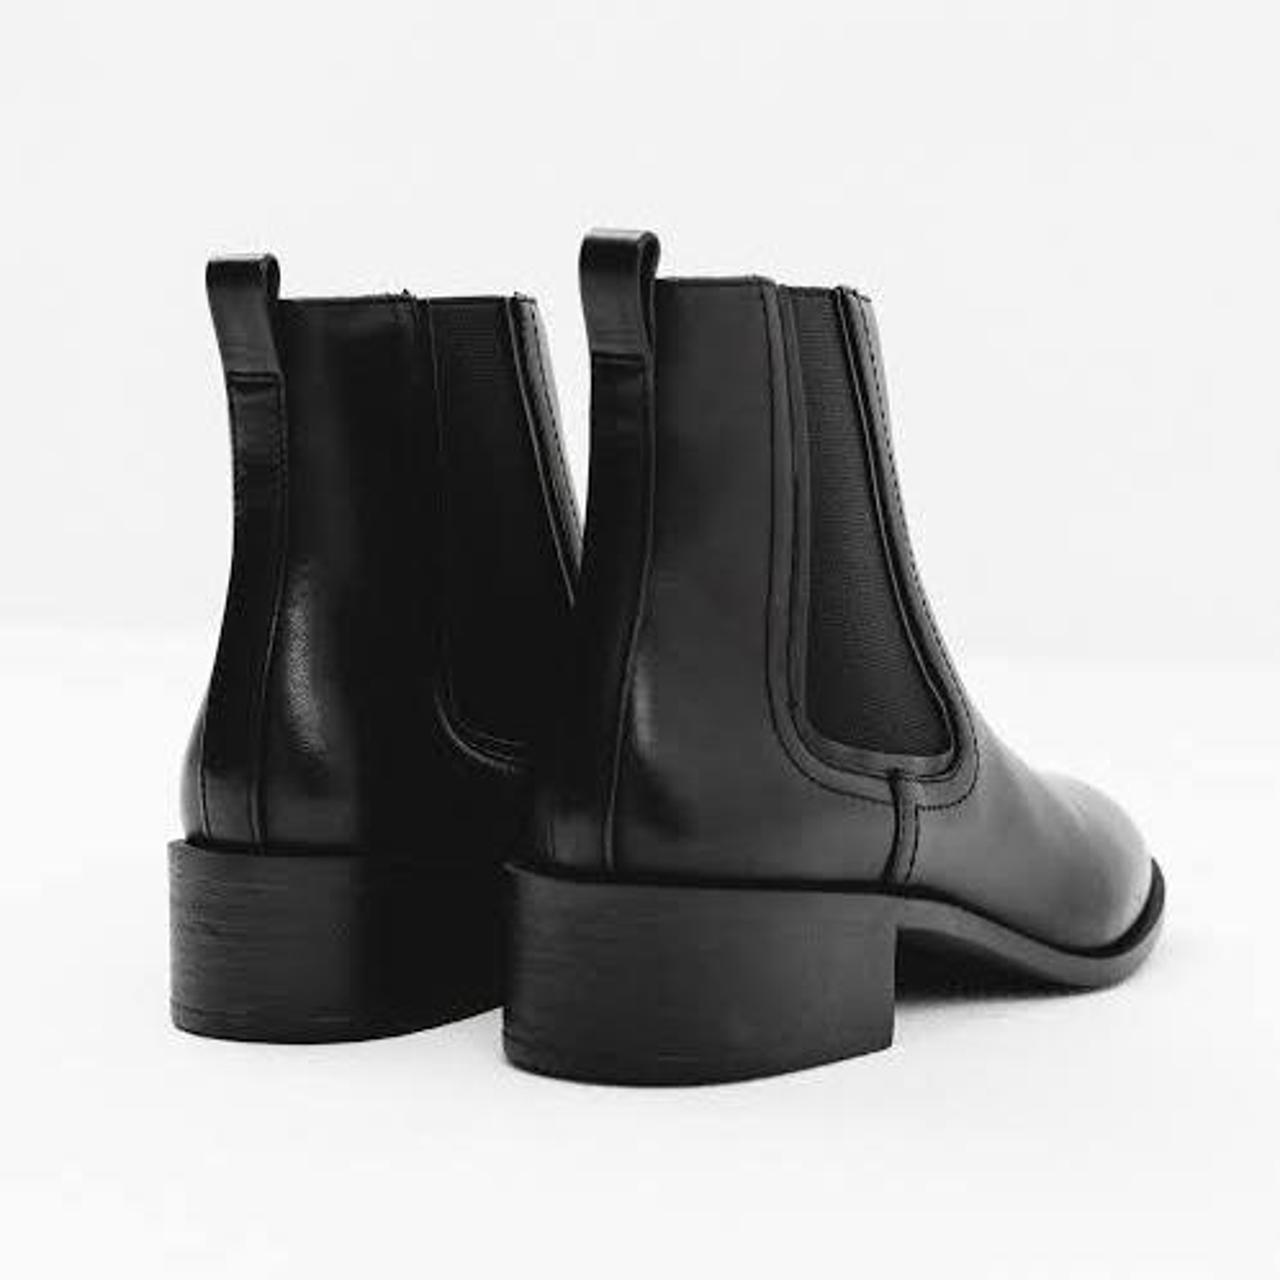 Black leather boots - size 39 (AUS8) Shubar - worn... - Depop